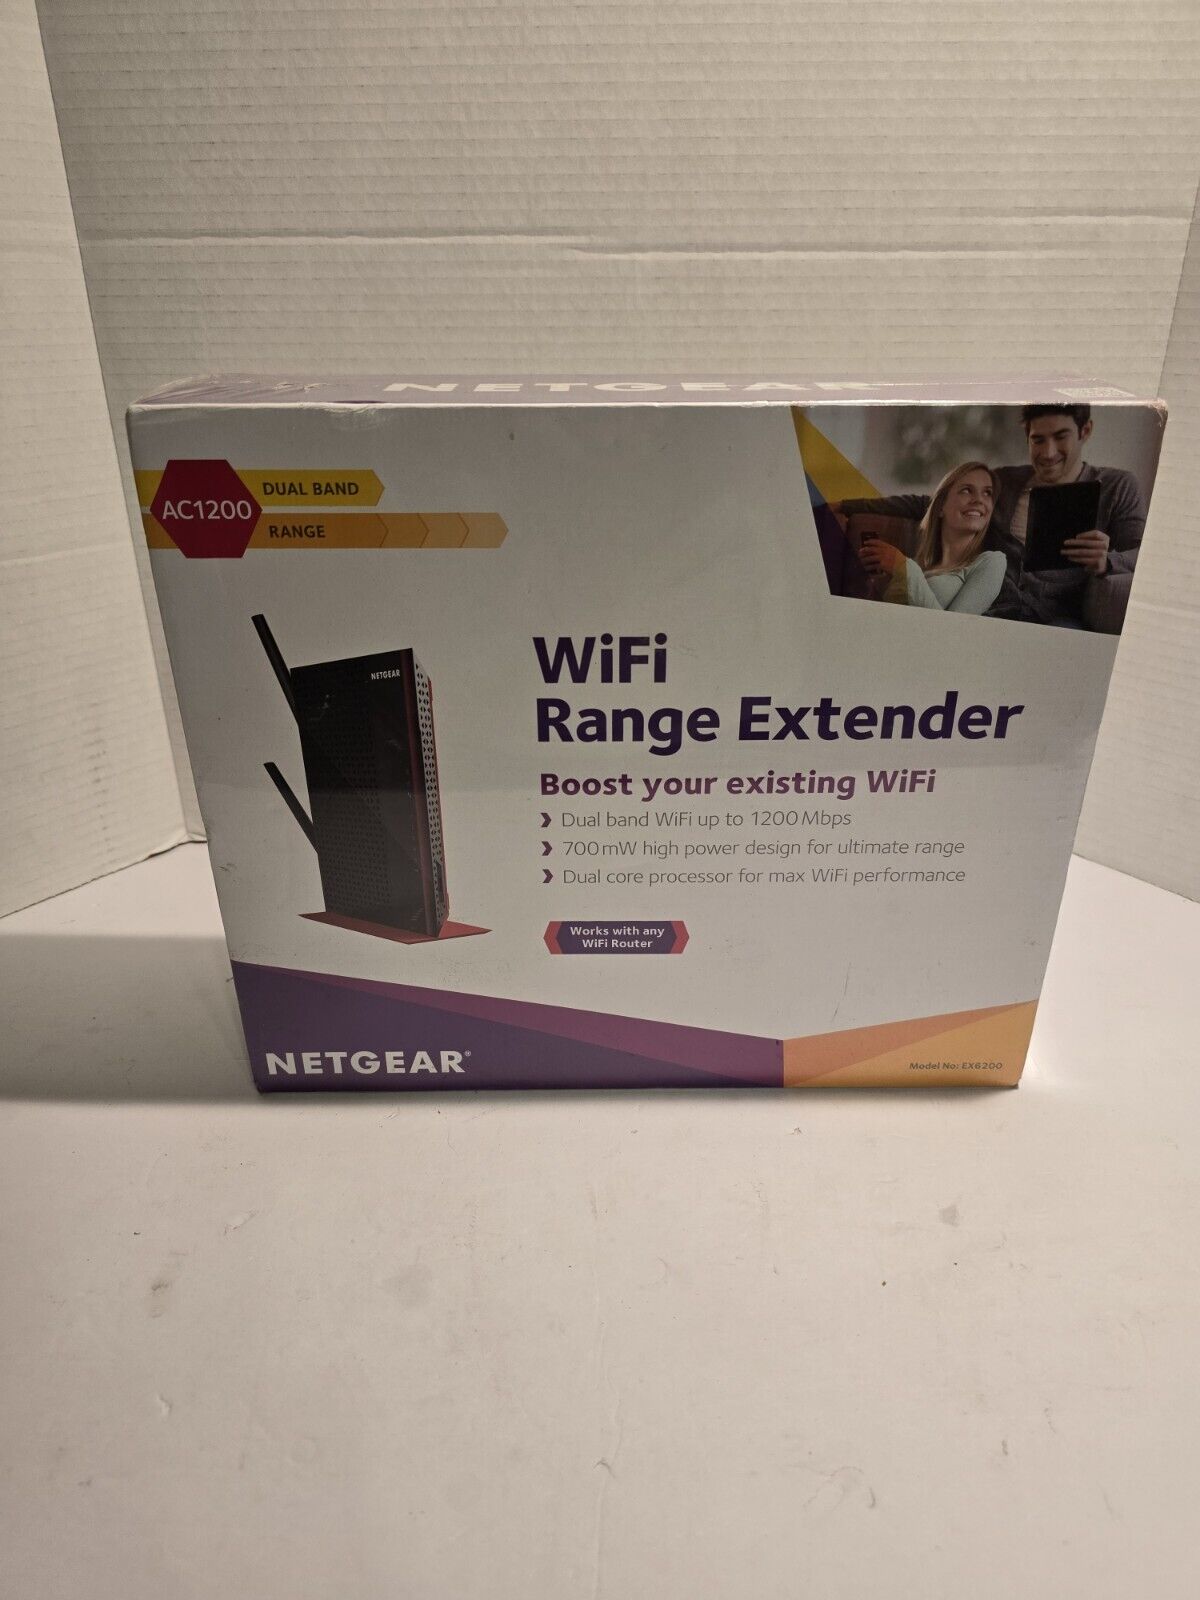 NETGEAR EX6200 Dual Band Wi-Fi Range Extender AC1200 - New - Sealed